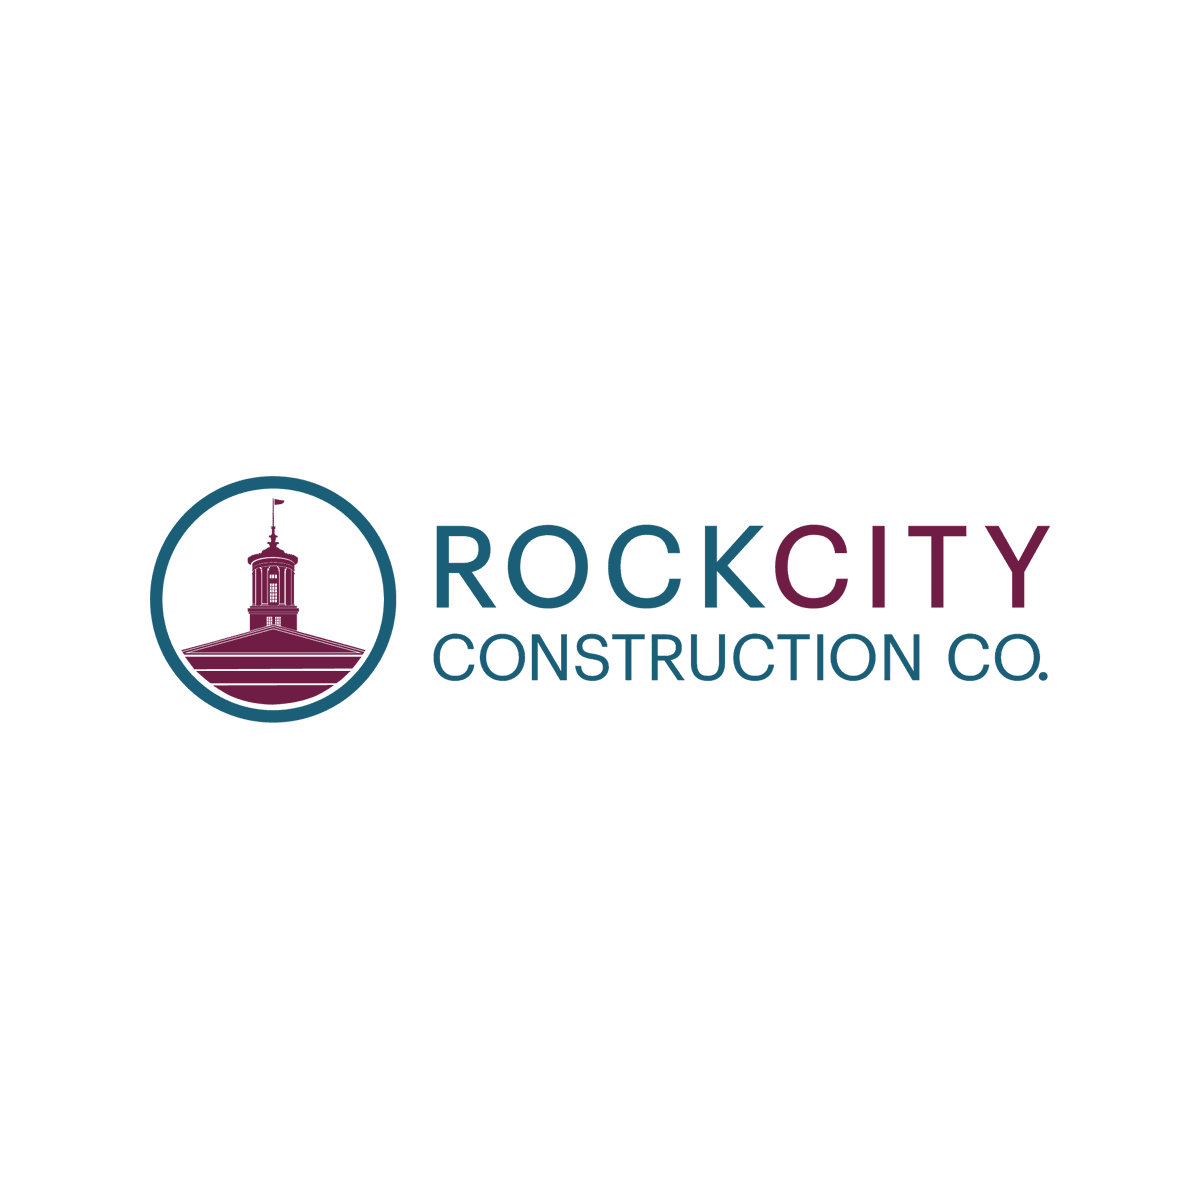 Product: Services - Rock City Construction Co.